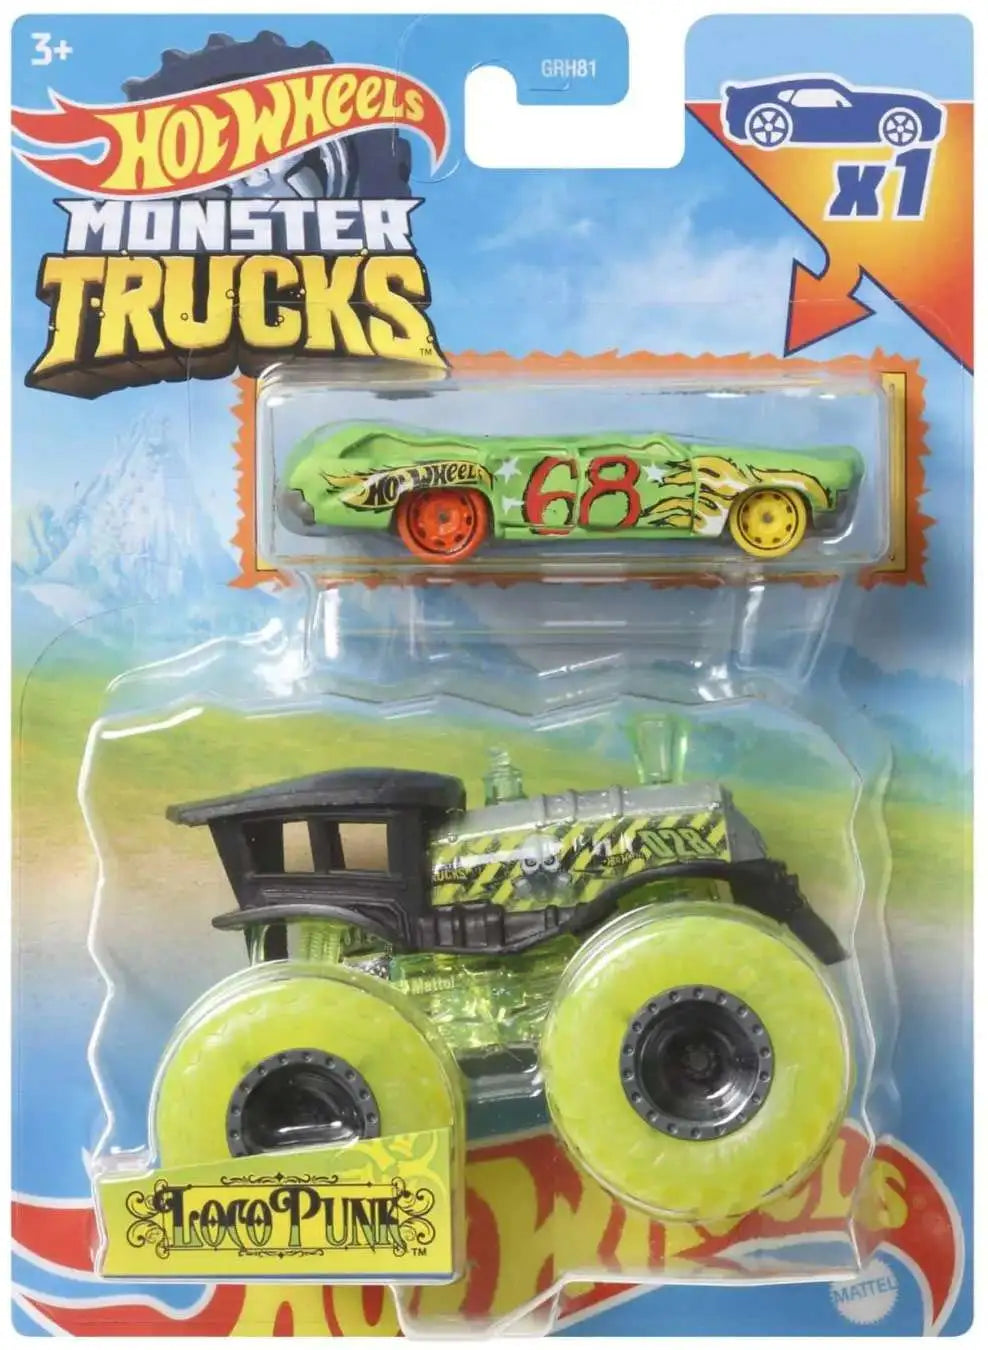 Mattel-Hot Wheels Monster Trucks - Loco Punk-HDC04-Legacy Toys